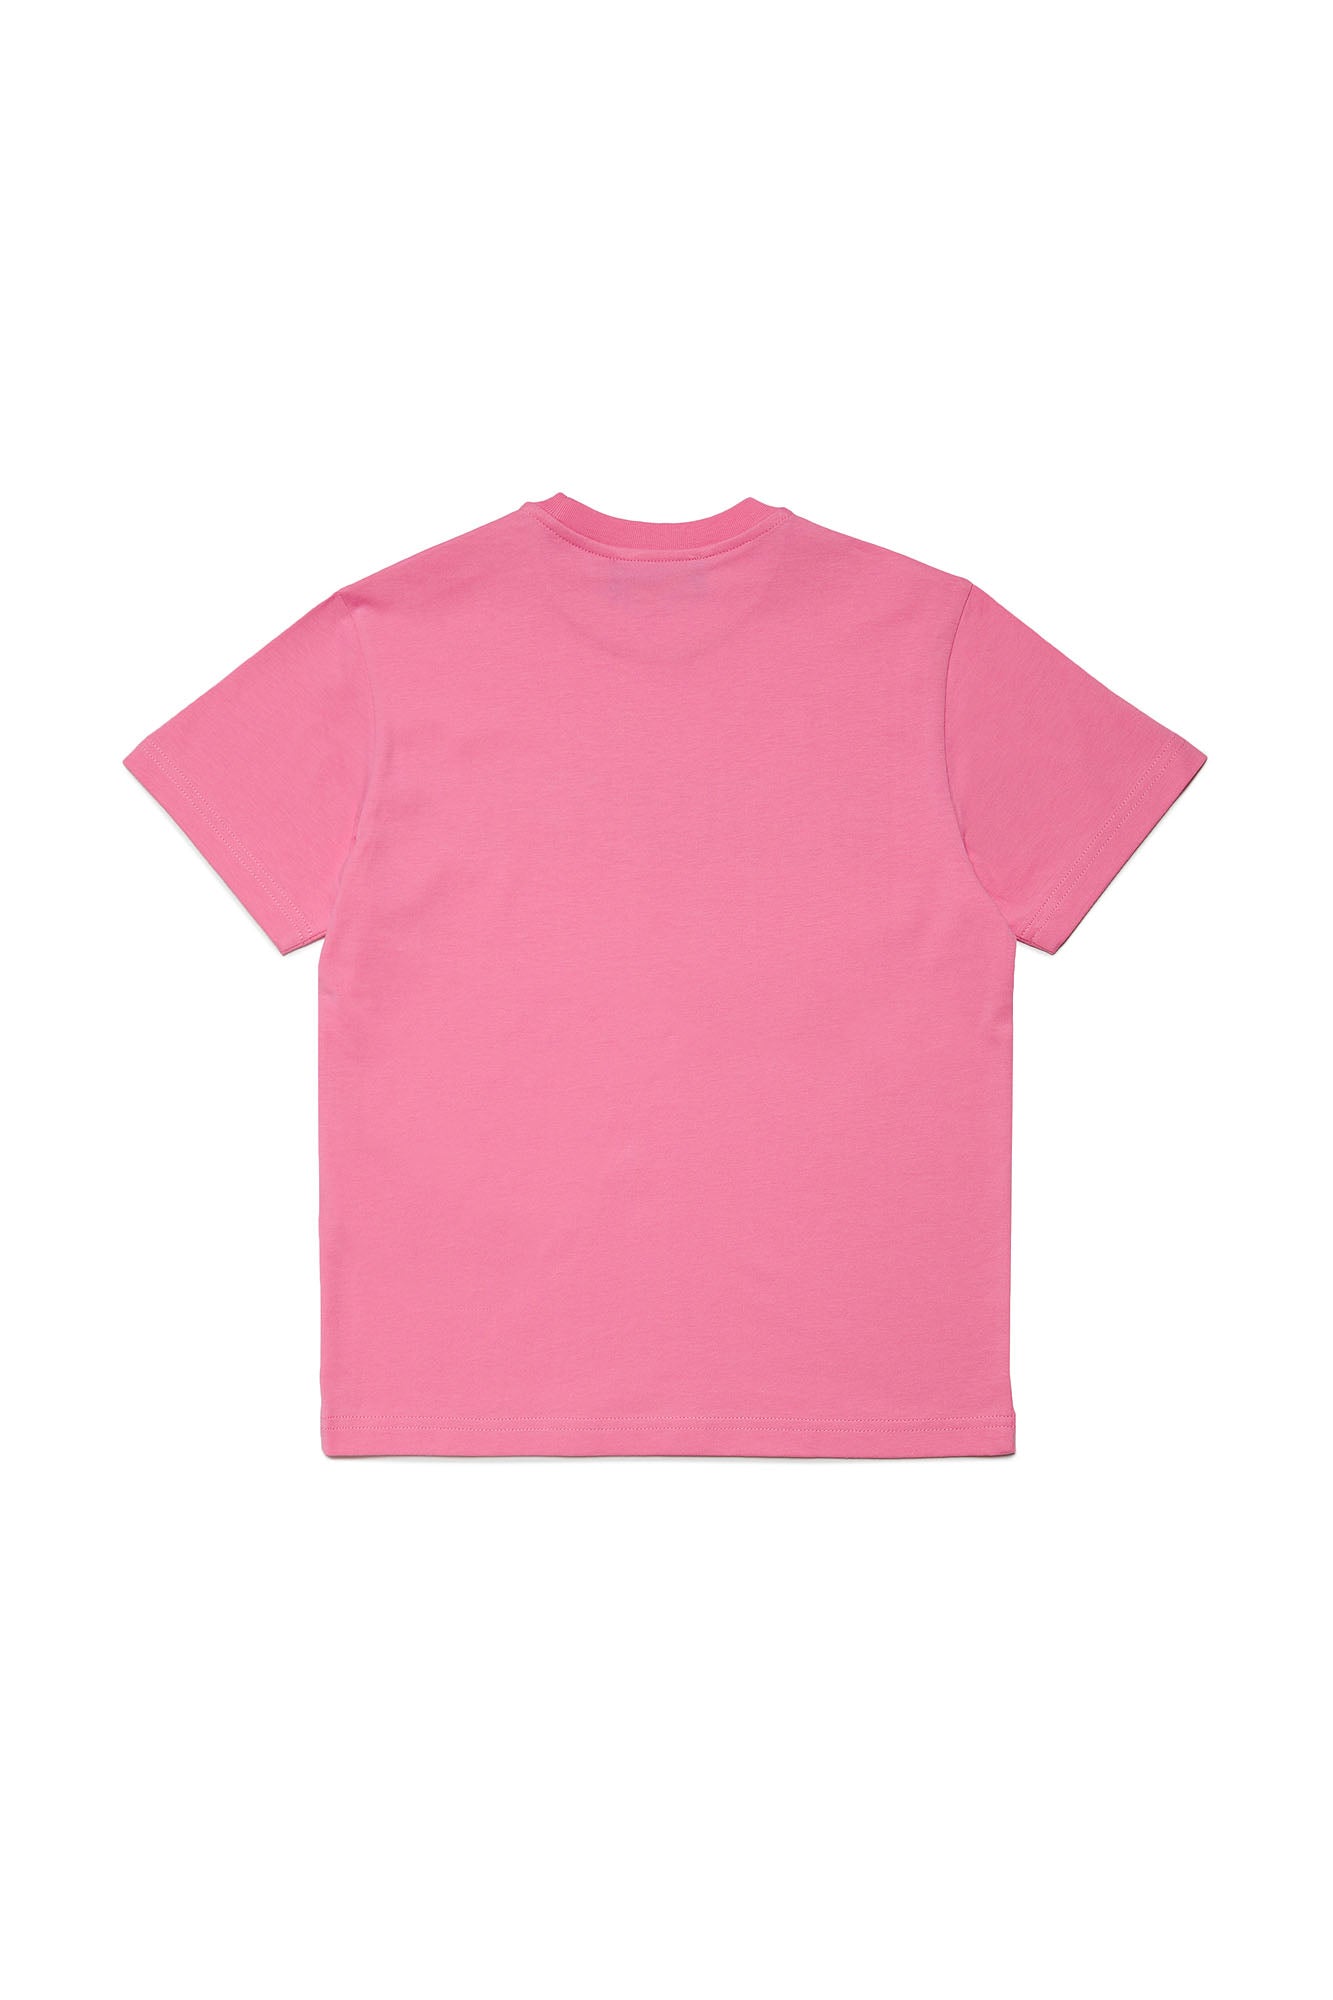 DSQUARED2-T-Shirt Unisex Bambino Relax Eco Logo-Rosa